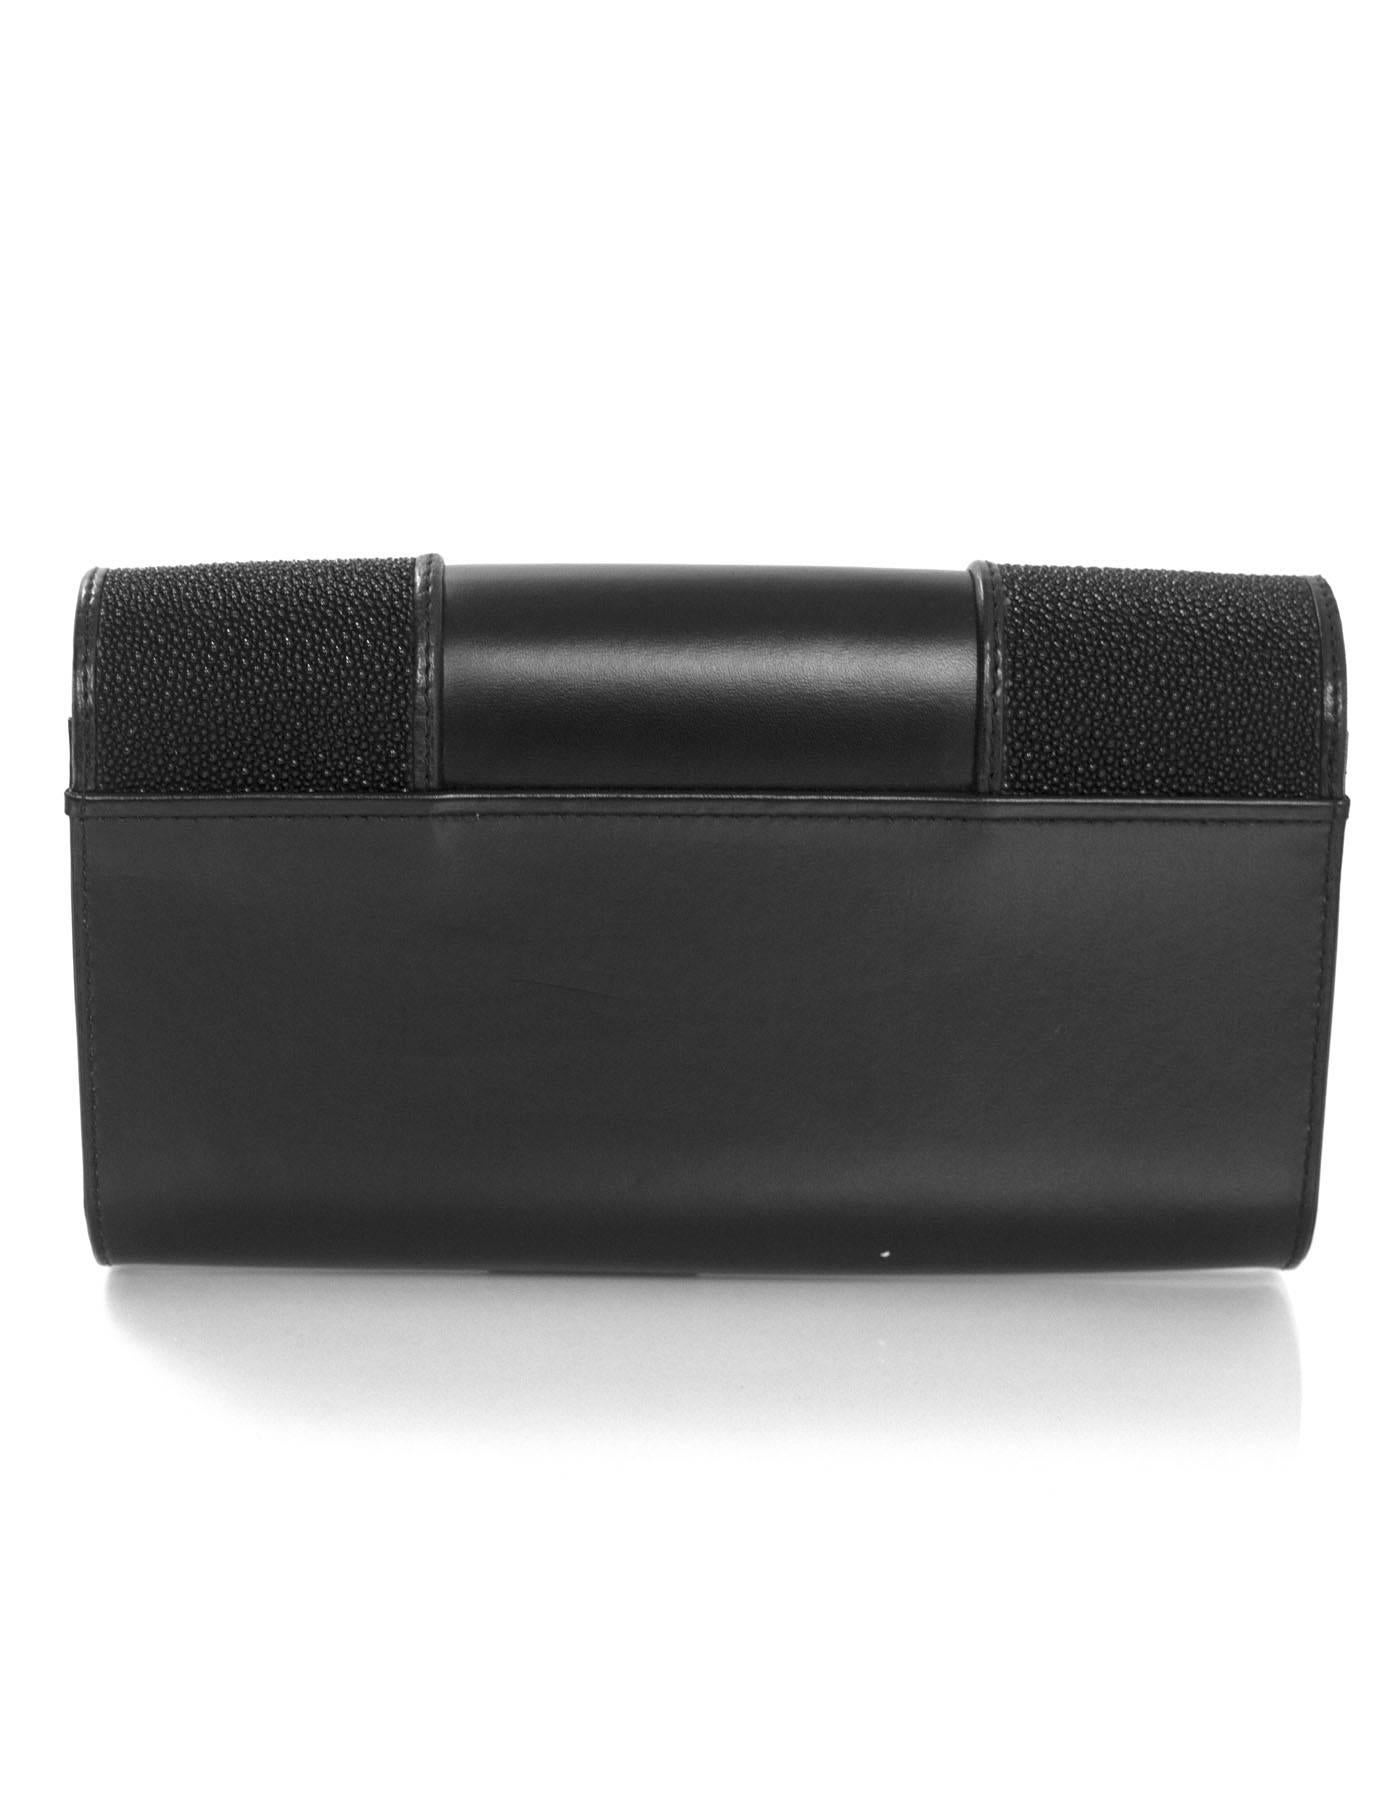 Women's Perrin Black Leather Stingray & Gunmetal L'asymetrique Glove Clutch Bag rt $2800